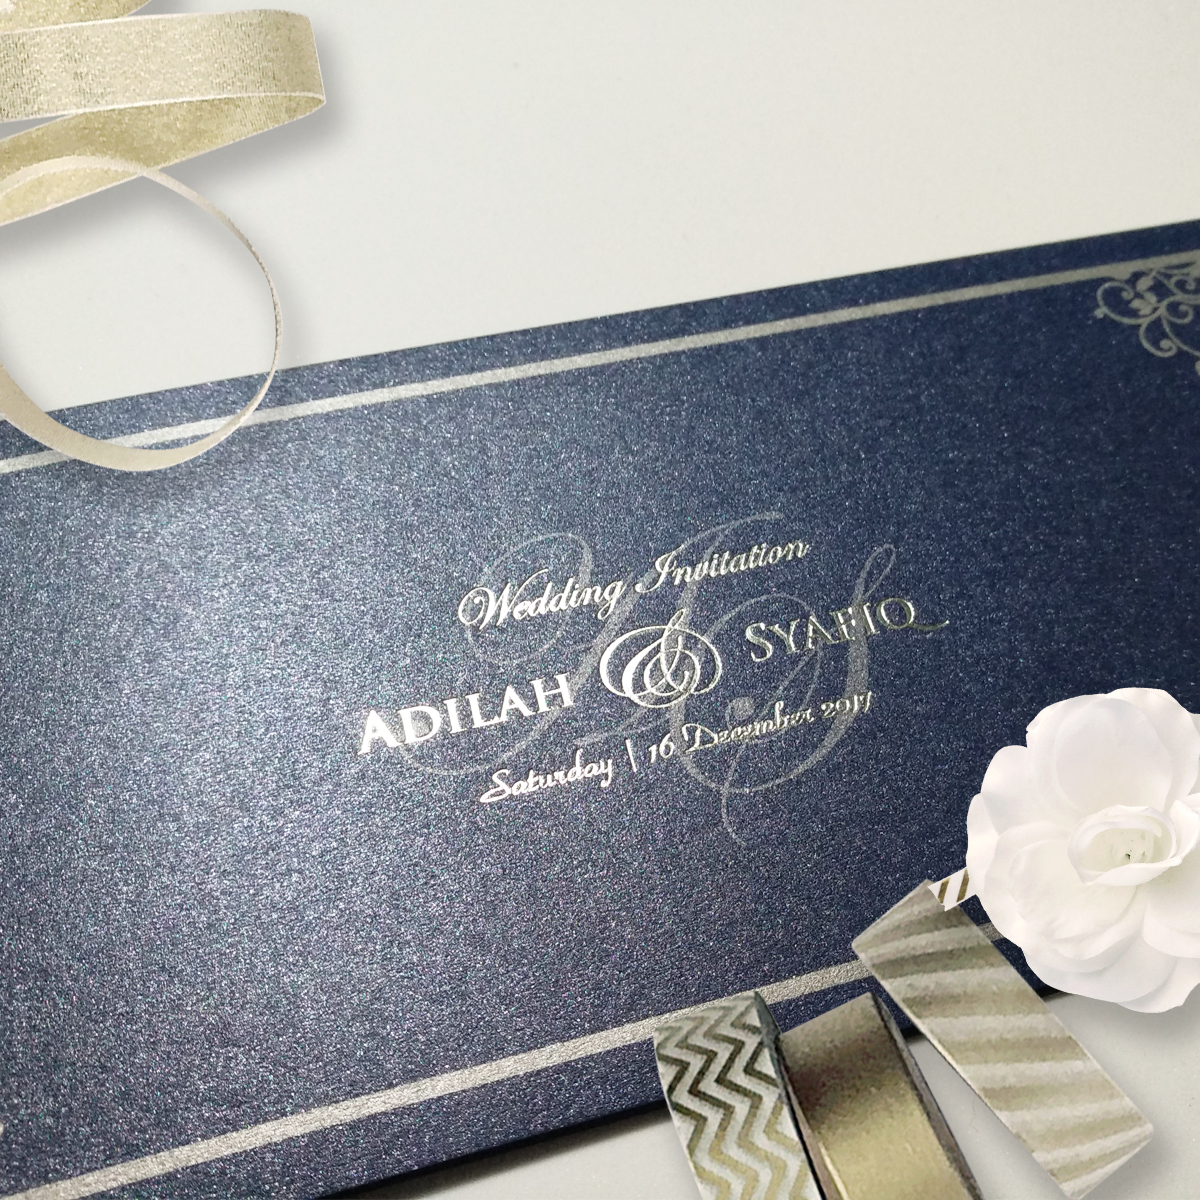 jentayu design kad kahwin venus balqis series vip metallic dark blue hot stamping silver inlay or print on card wedding cards malaysia 